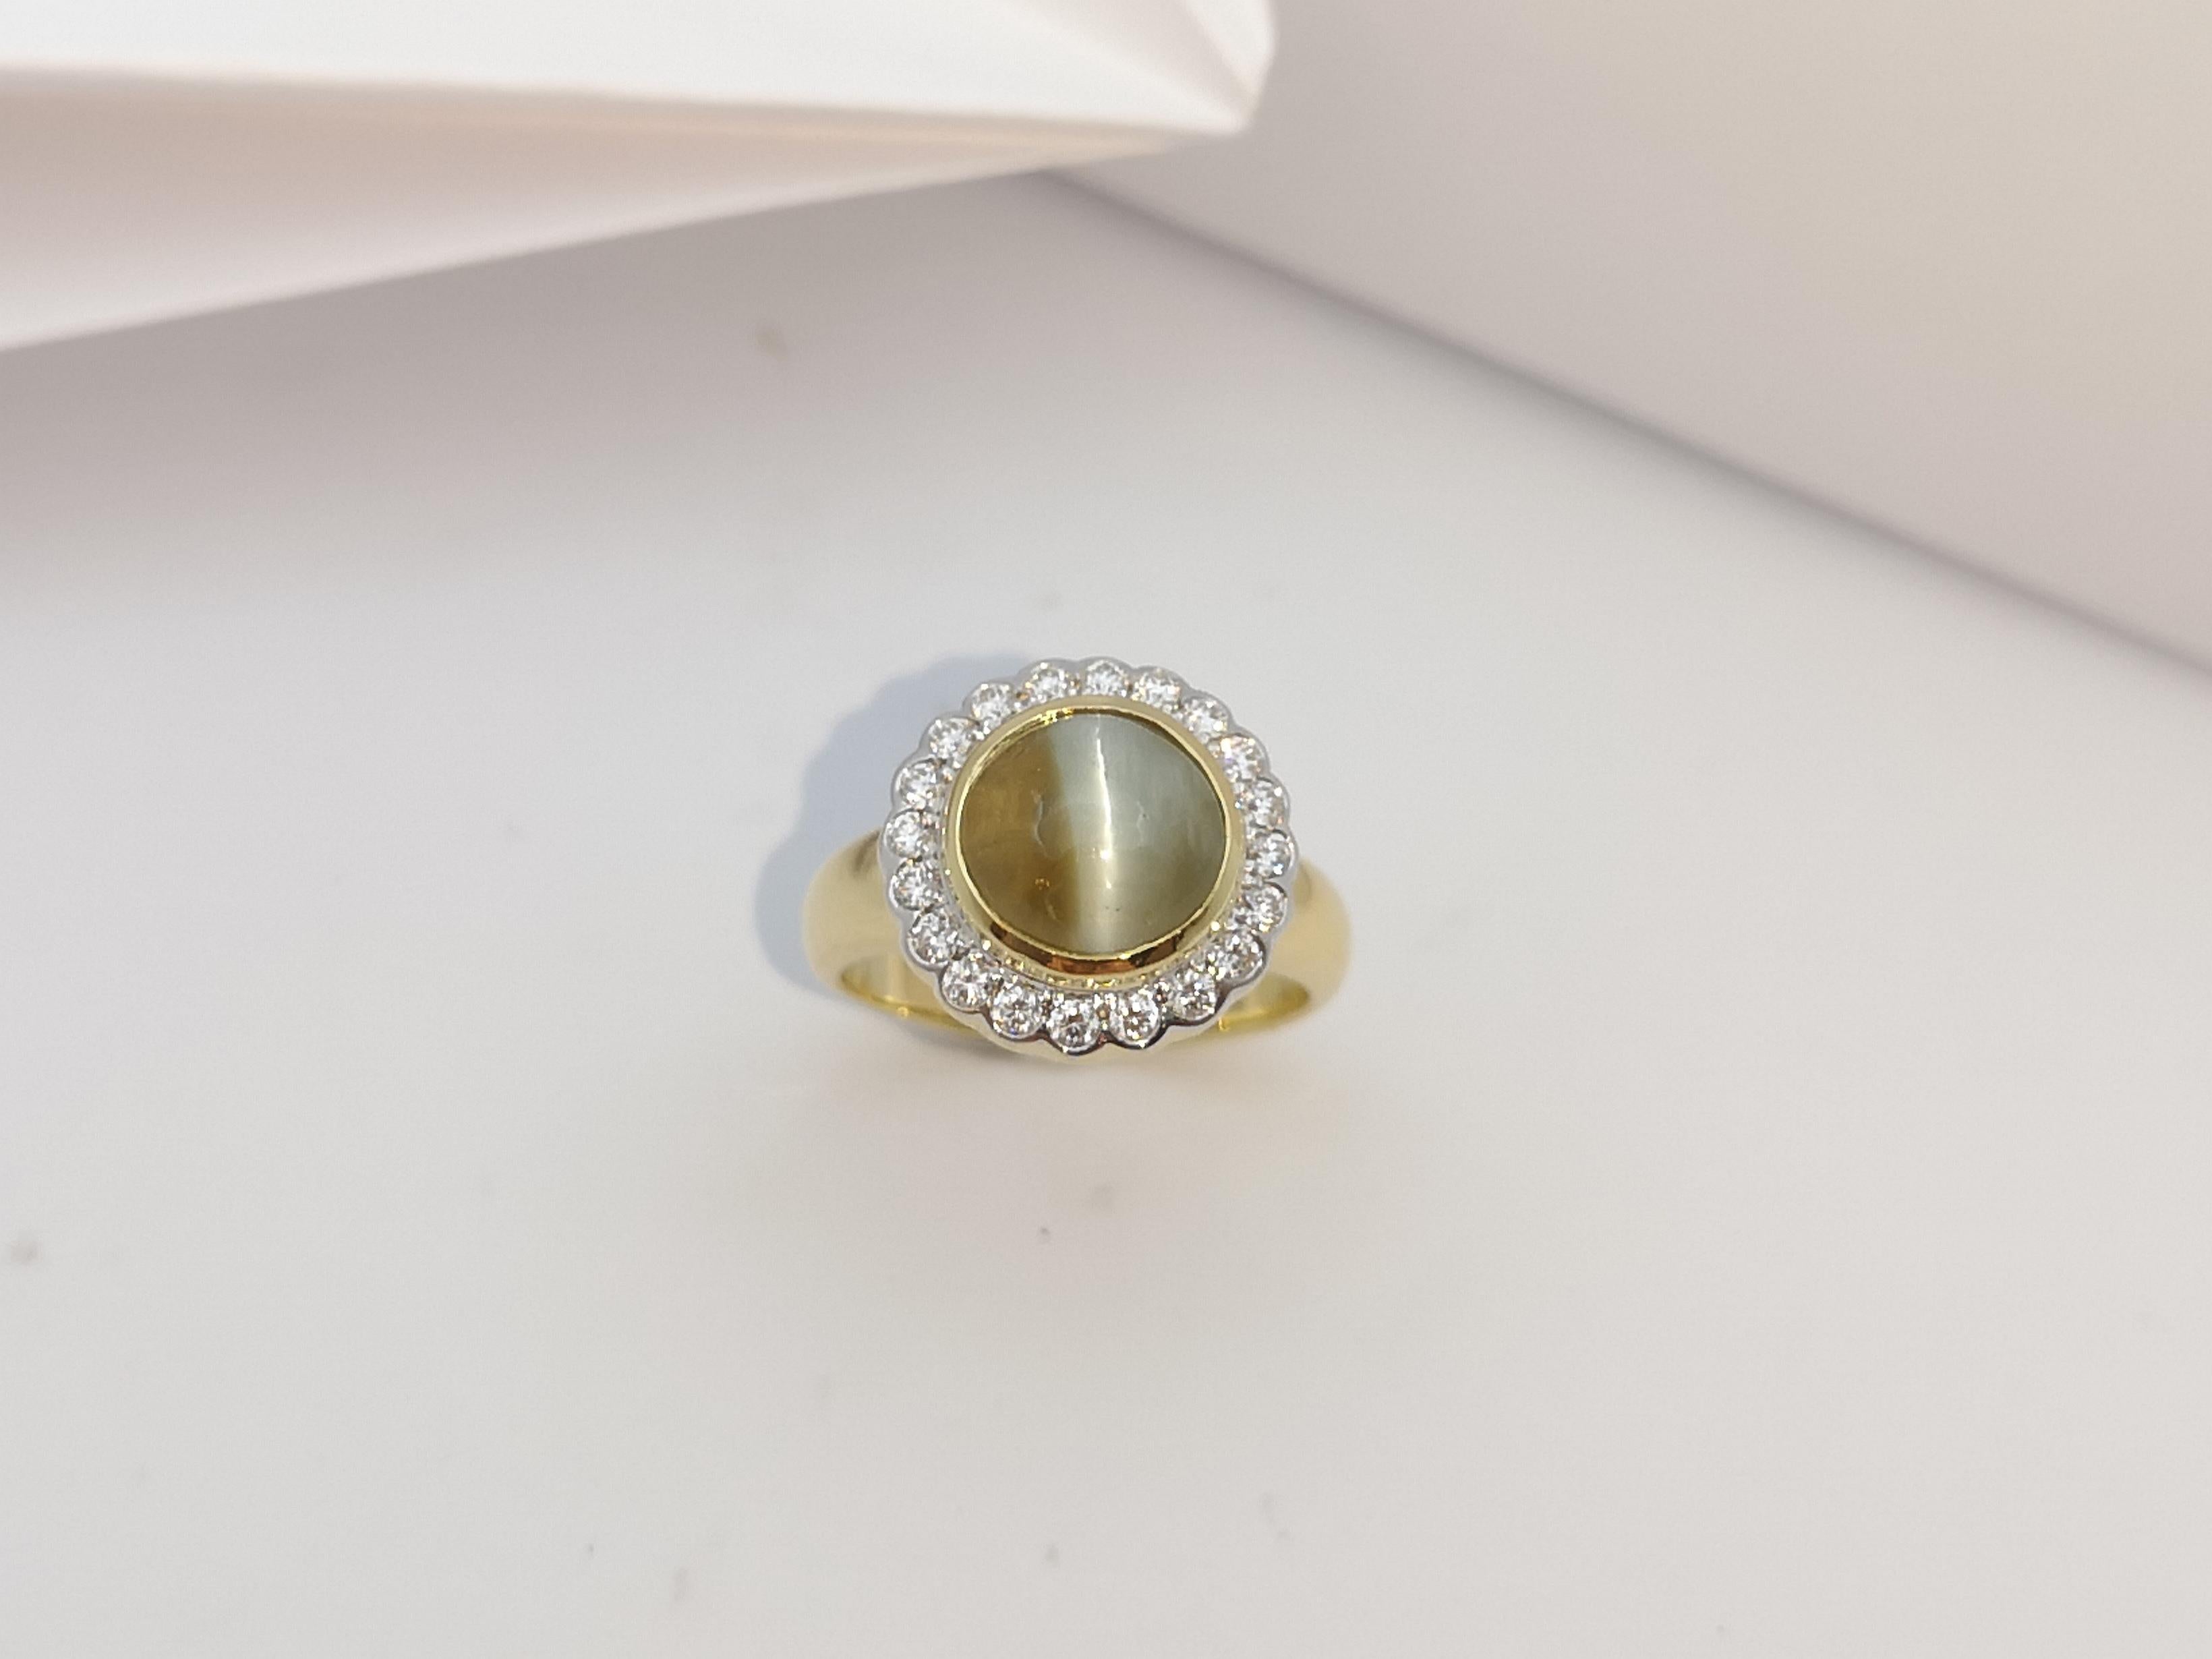 Chrysoberyl Cat's Eye with Diamond Ring Set in 18 Karat Gold For Sale 7